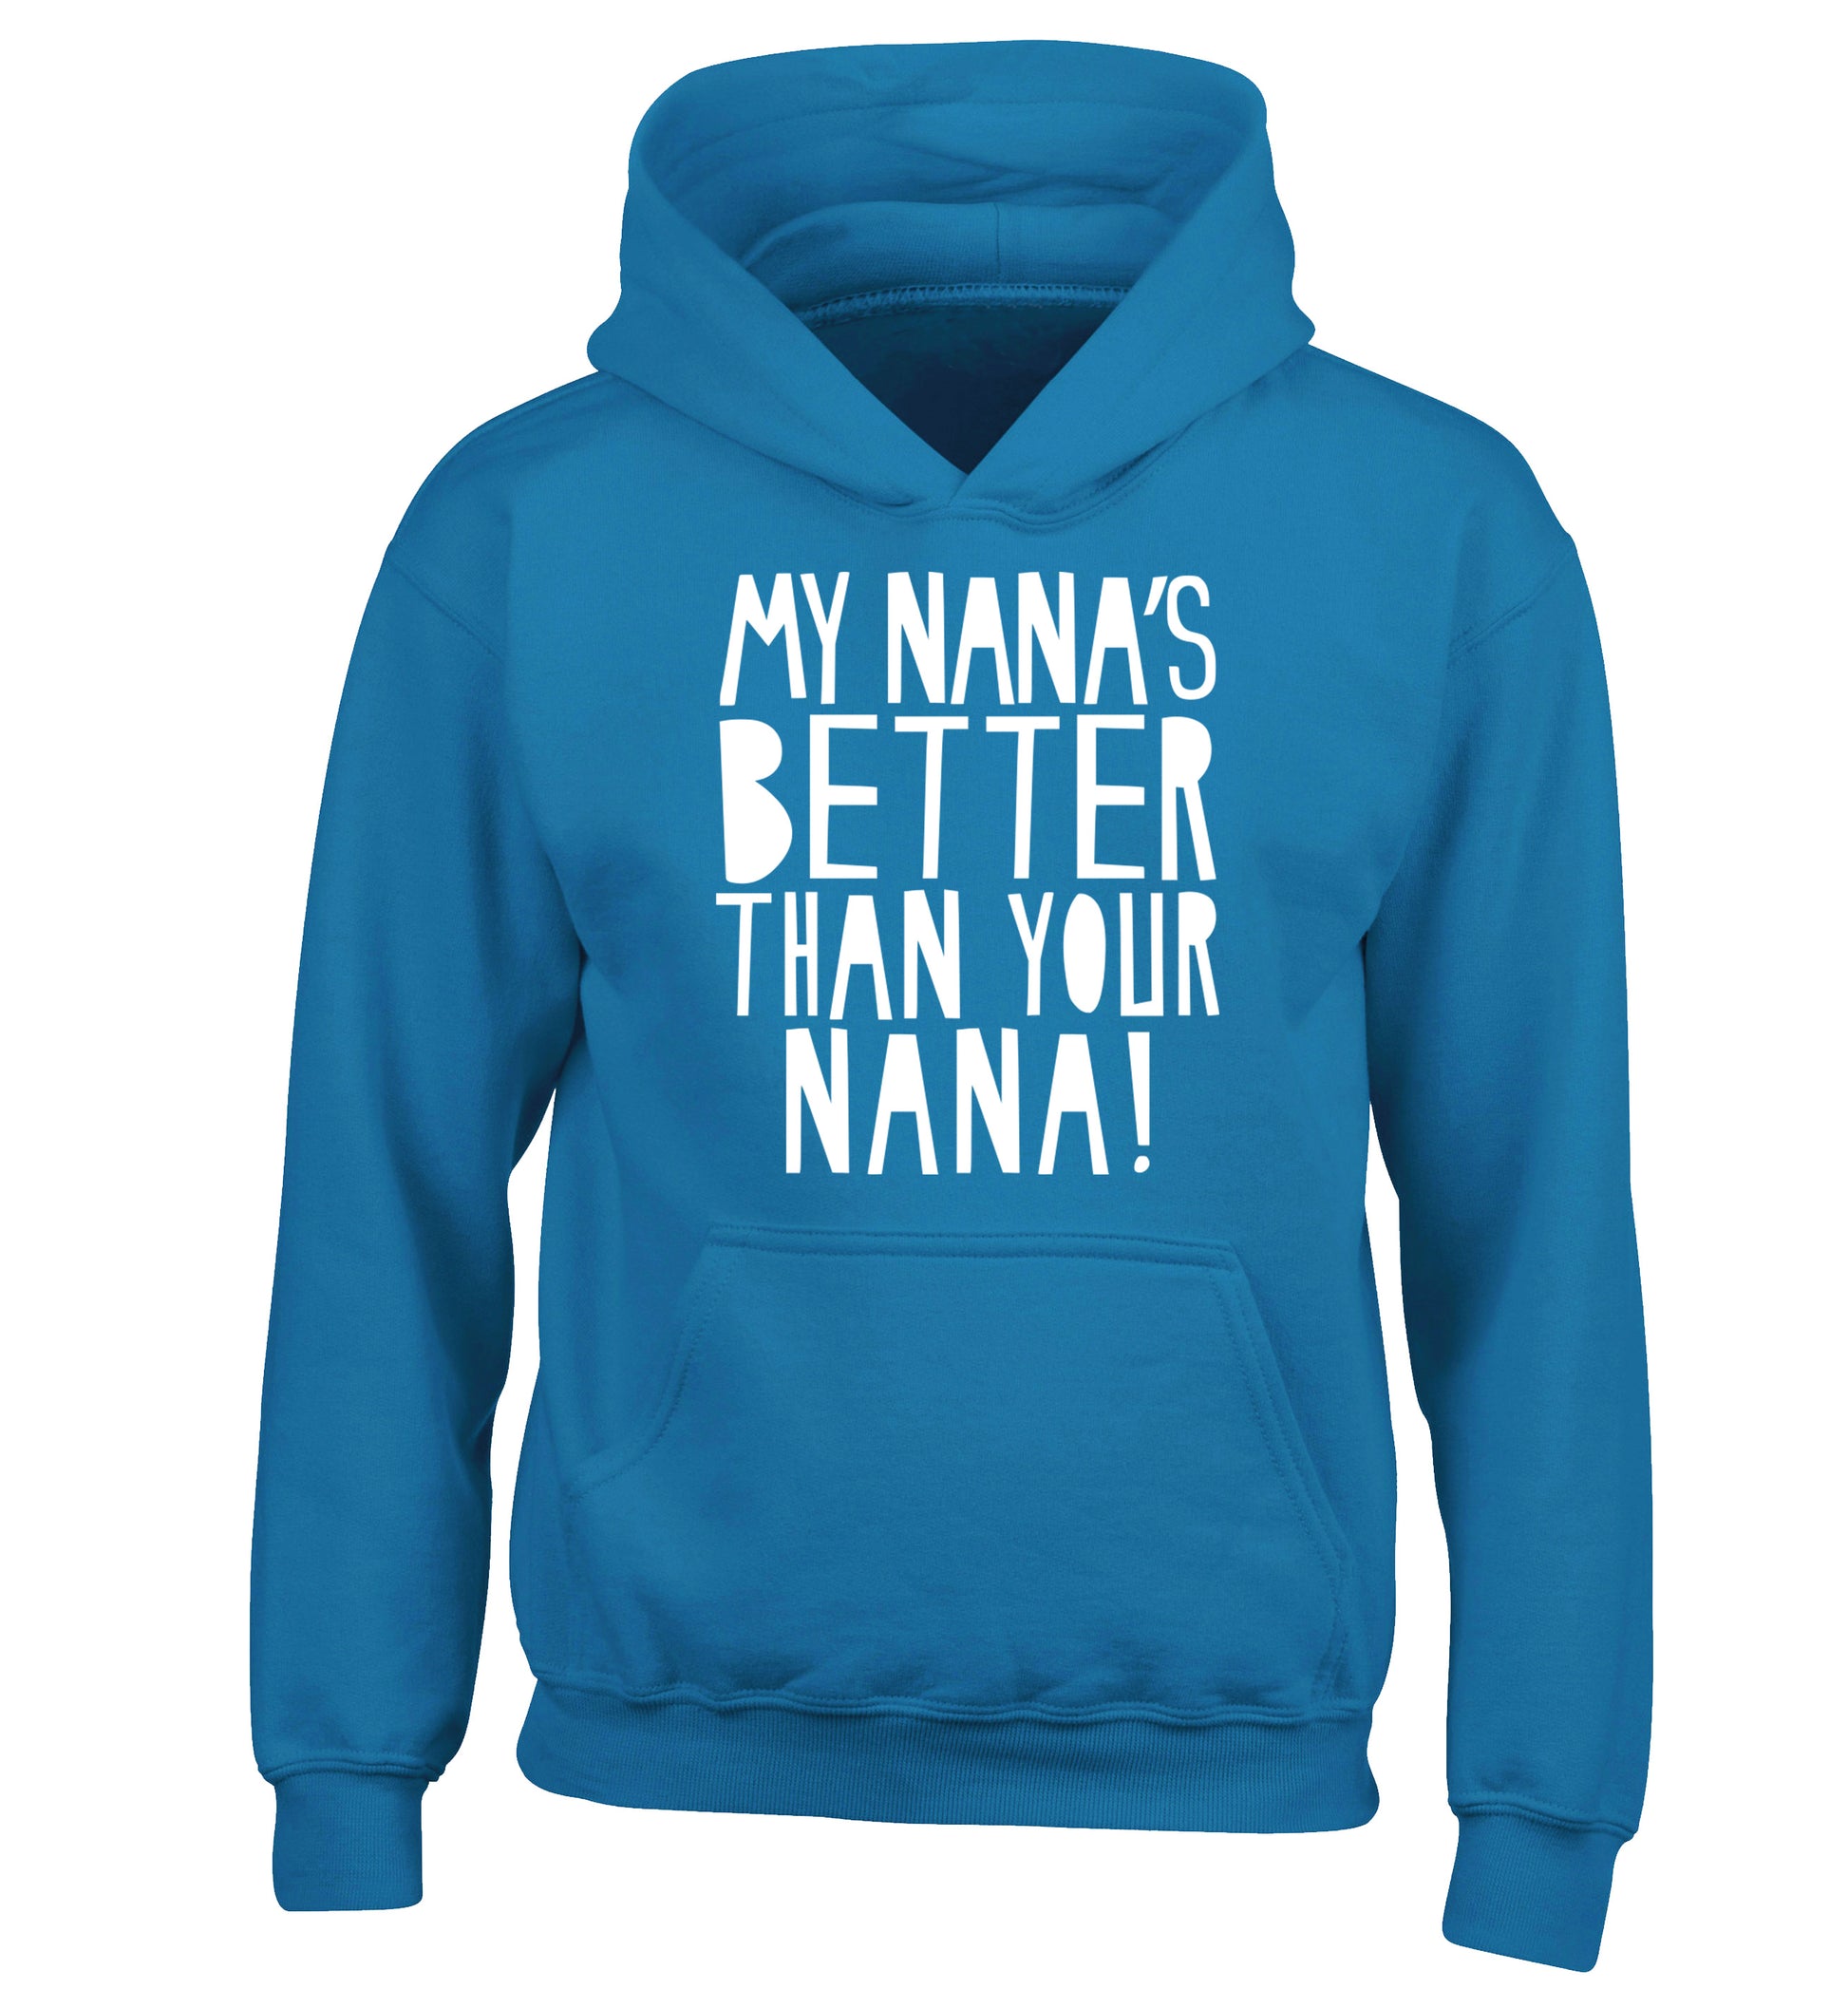 My nana's better than your nana children's blue hoodie 12-13 Years